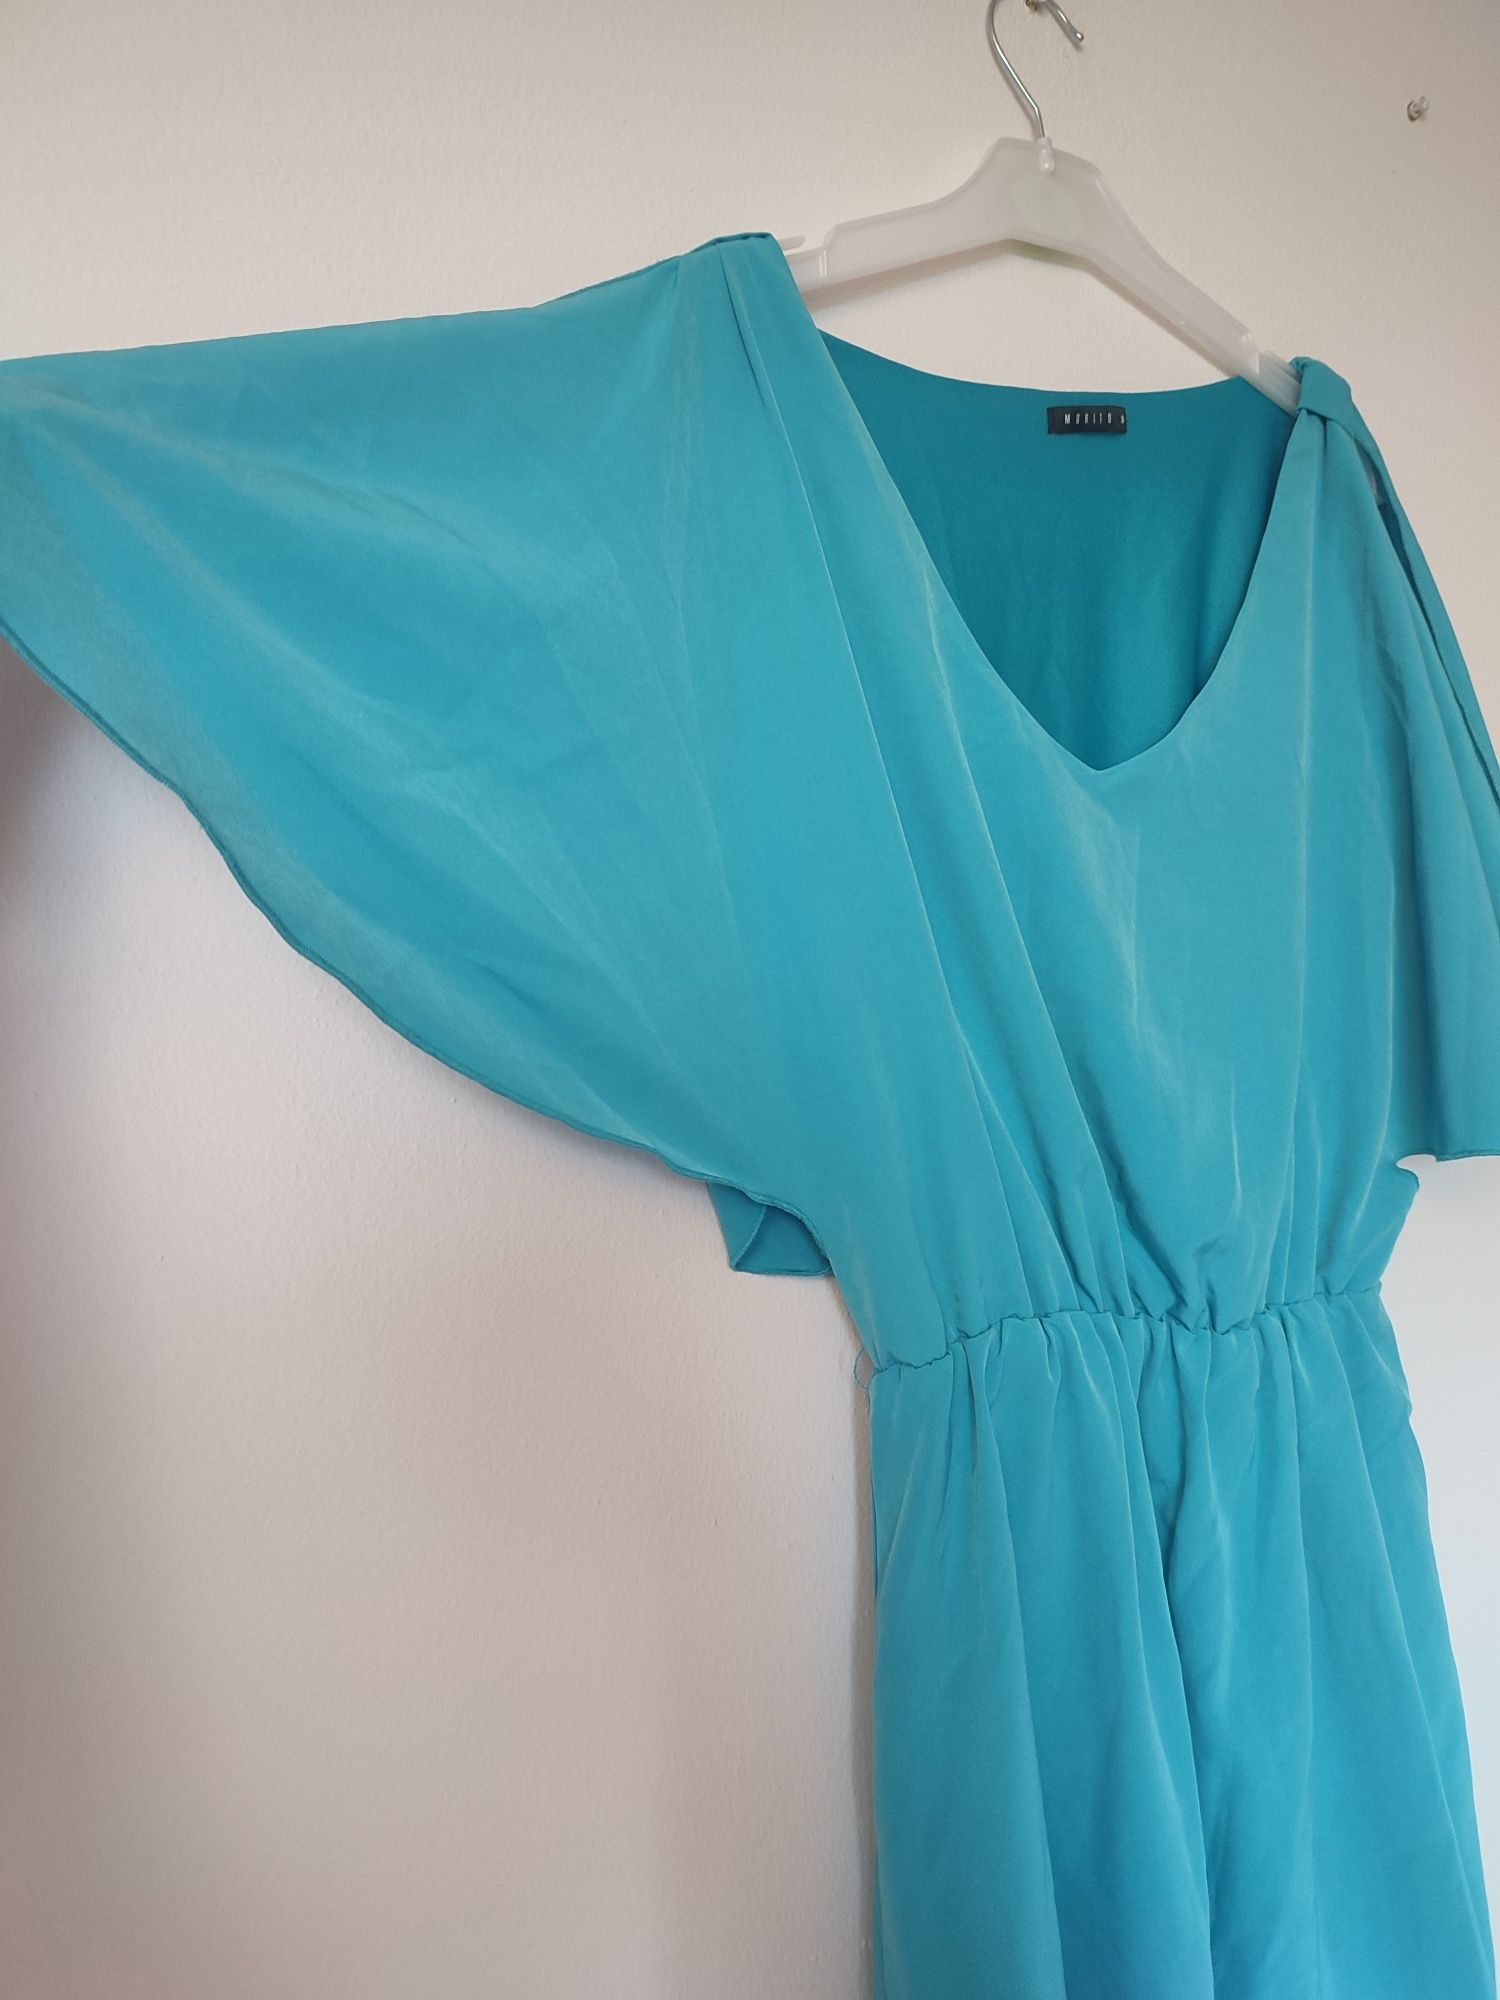 Niebieska sukienka Mohito 36